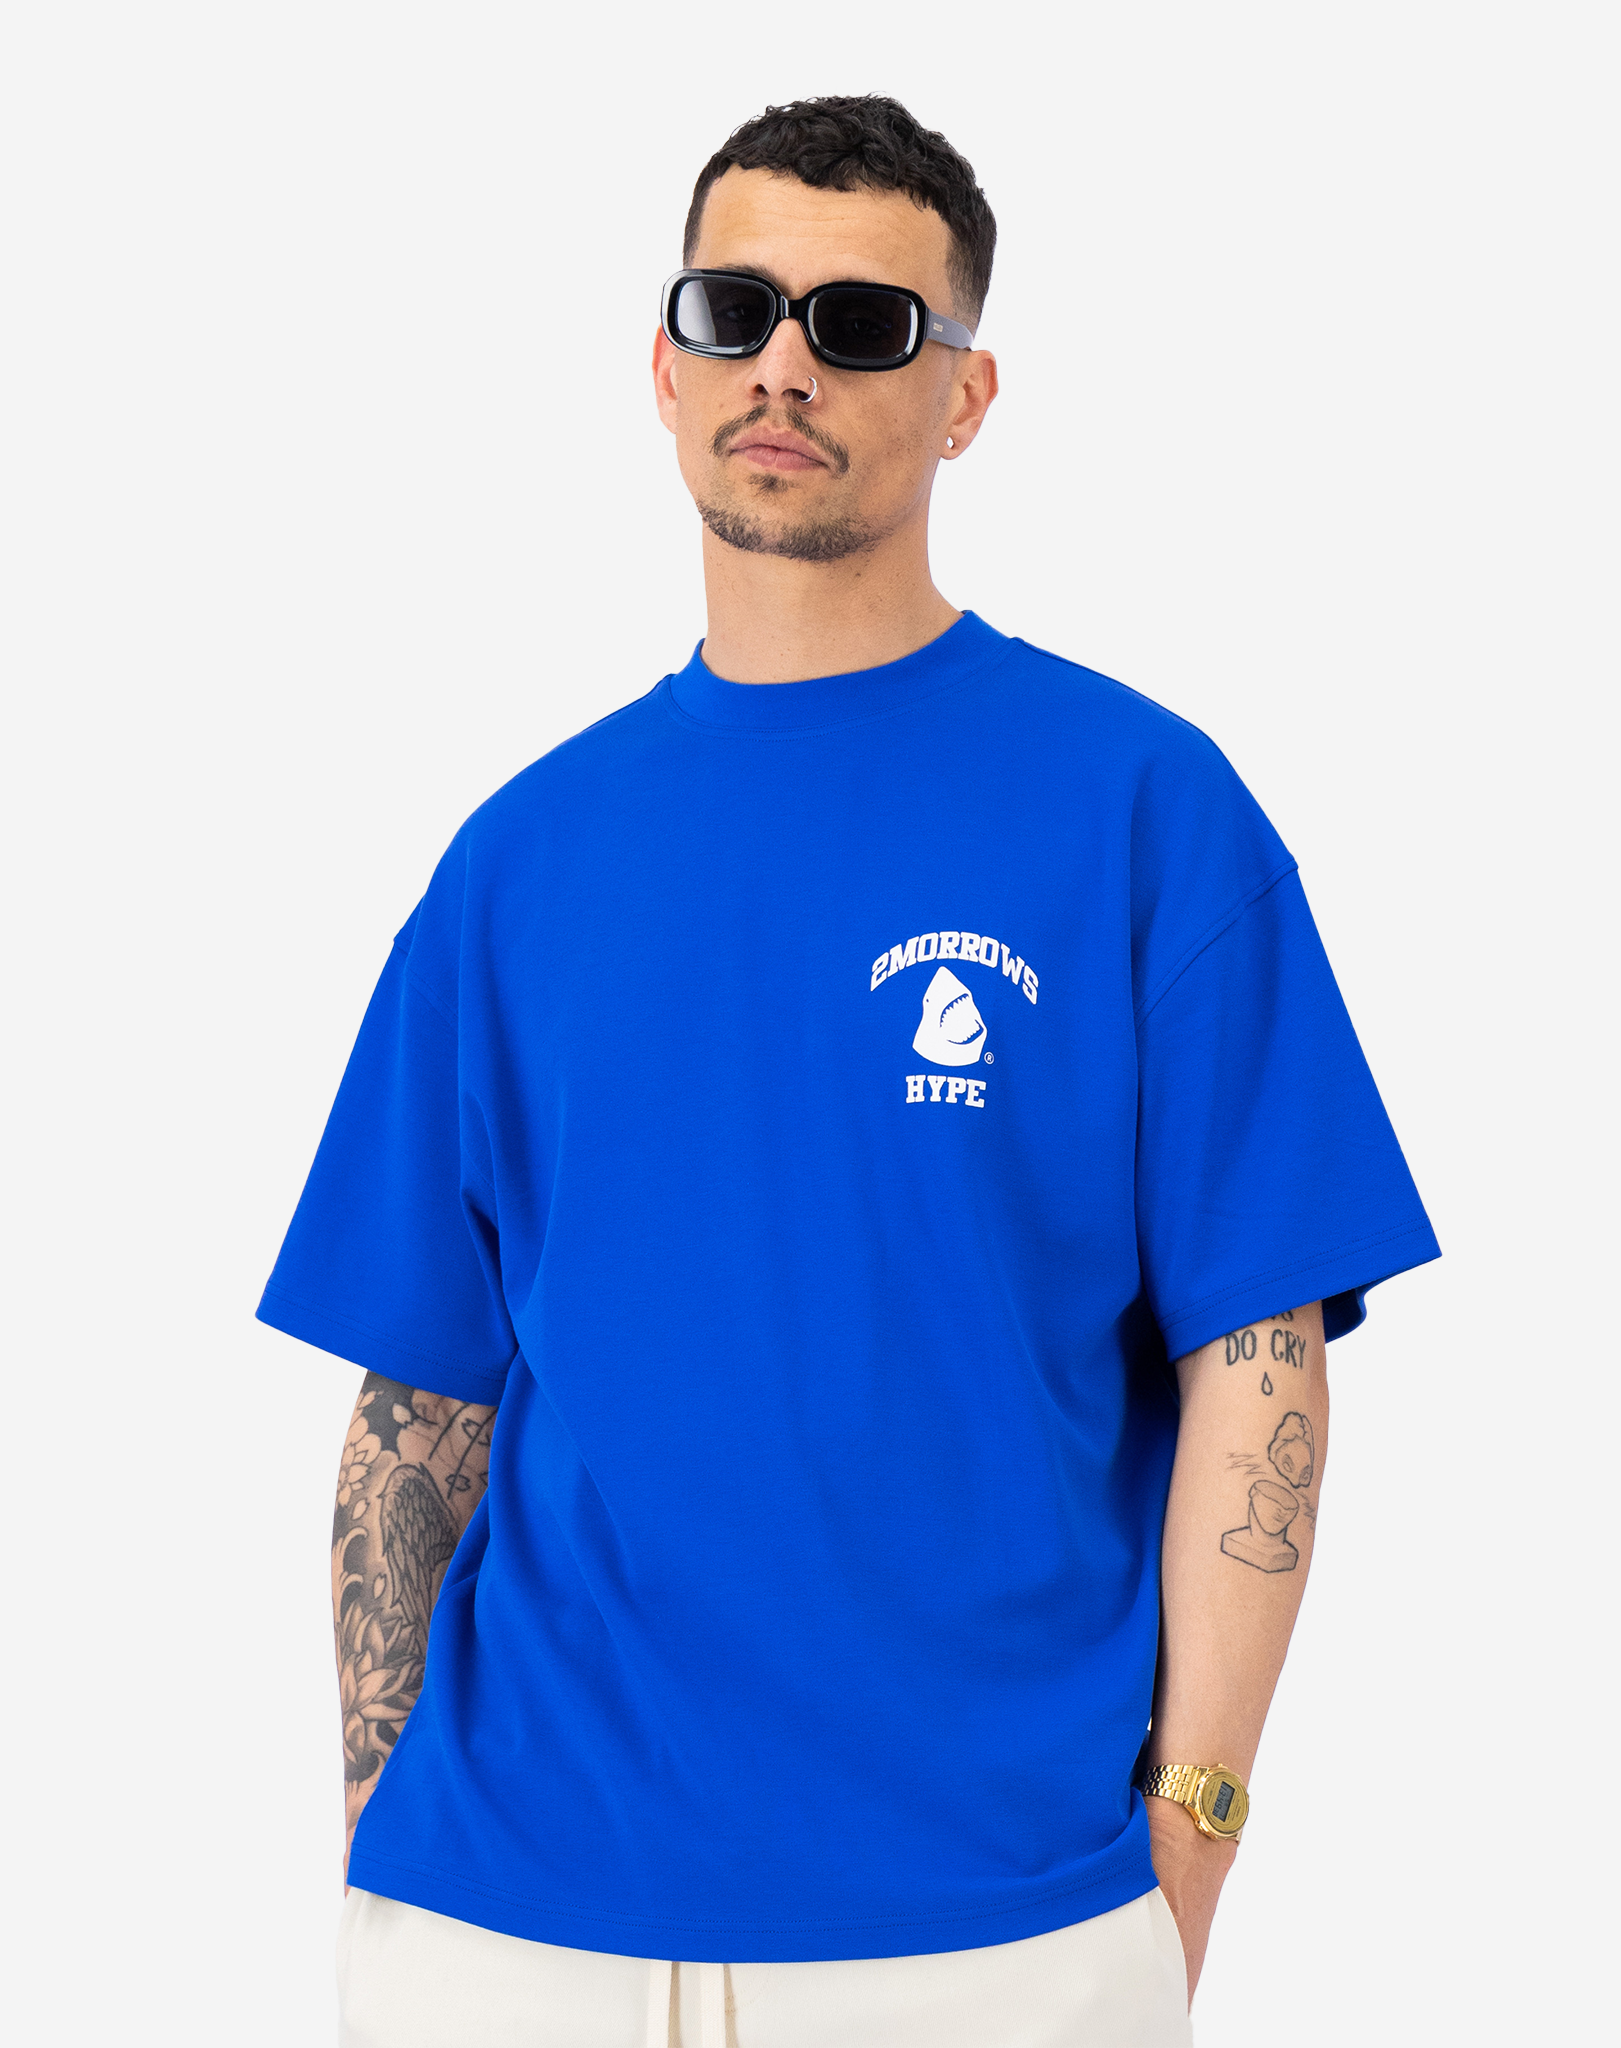 2Morrowshype Wave T-shirt Kobalt Blauw